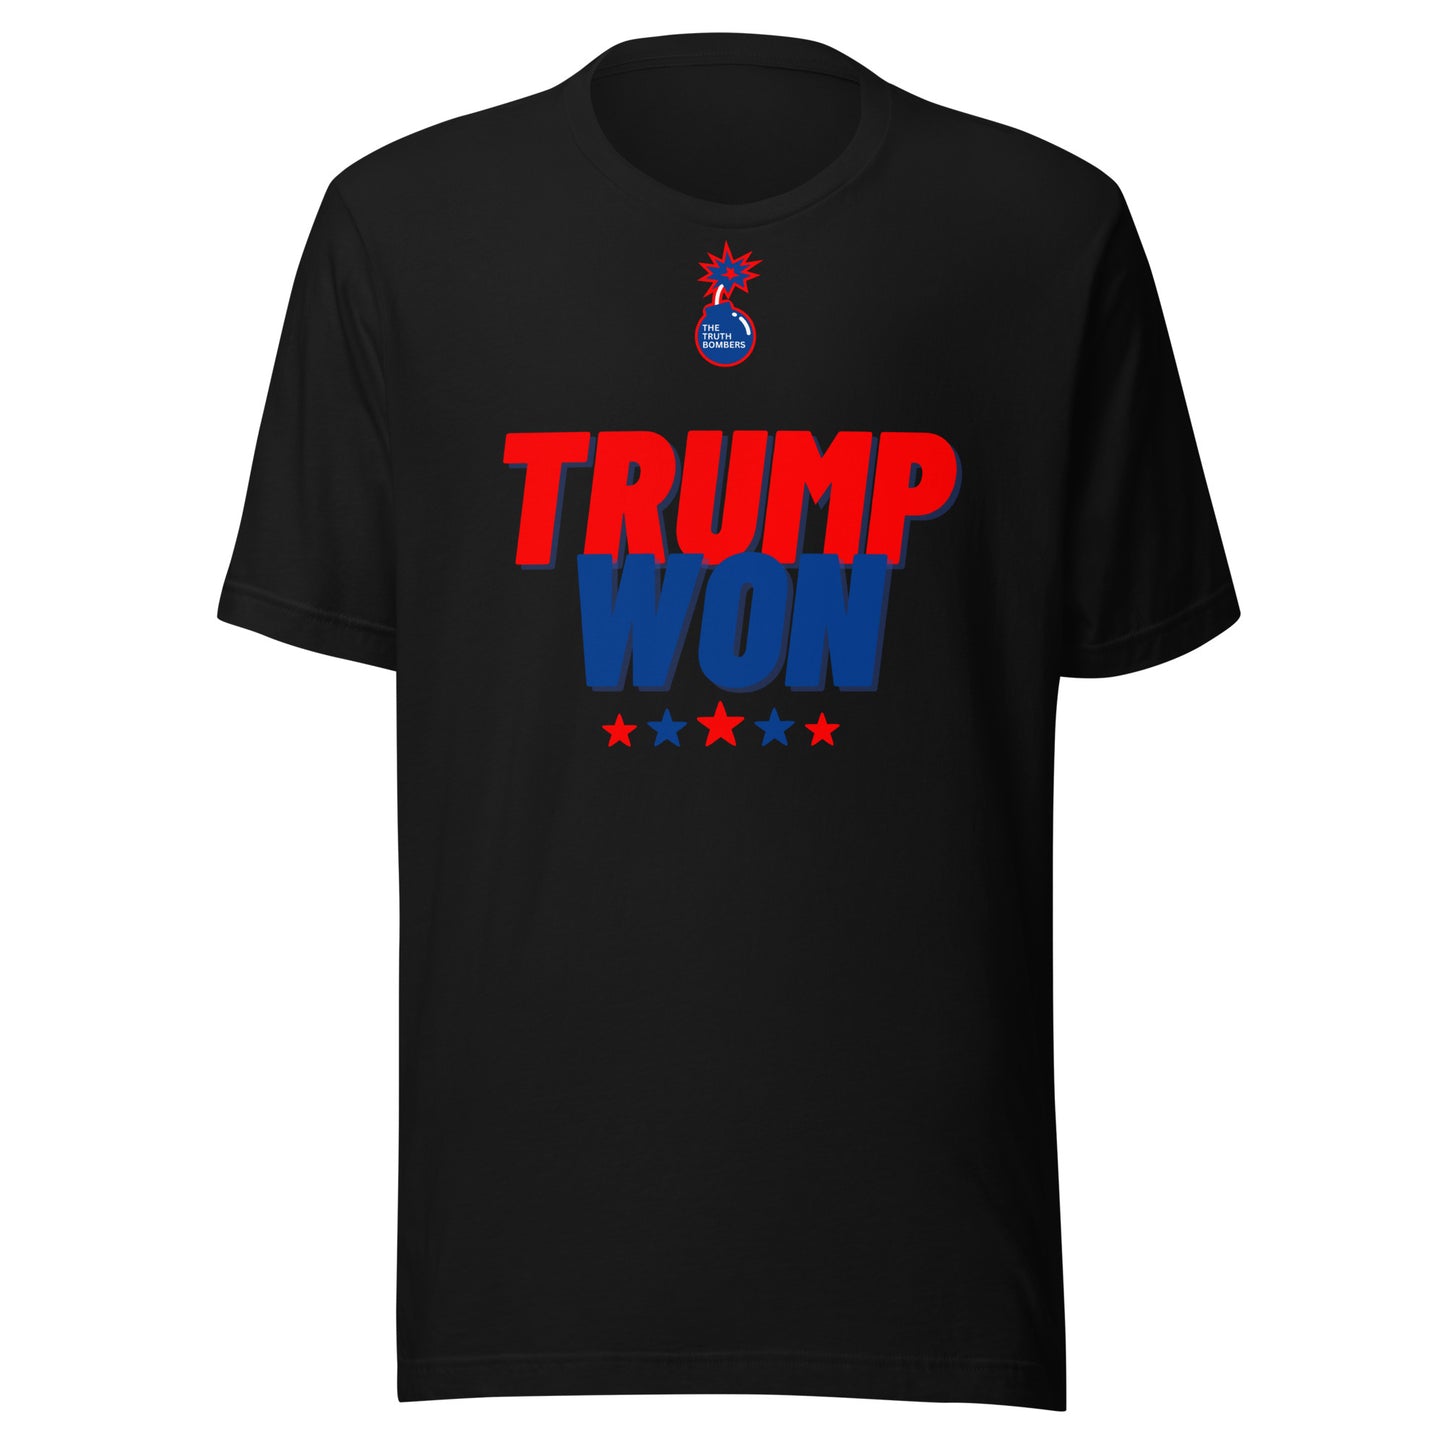 Trump Won T-Shirt (Black)